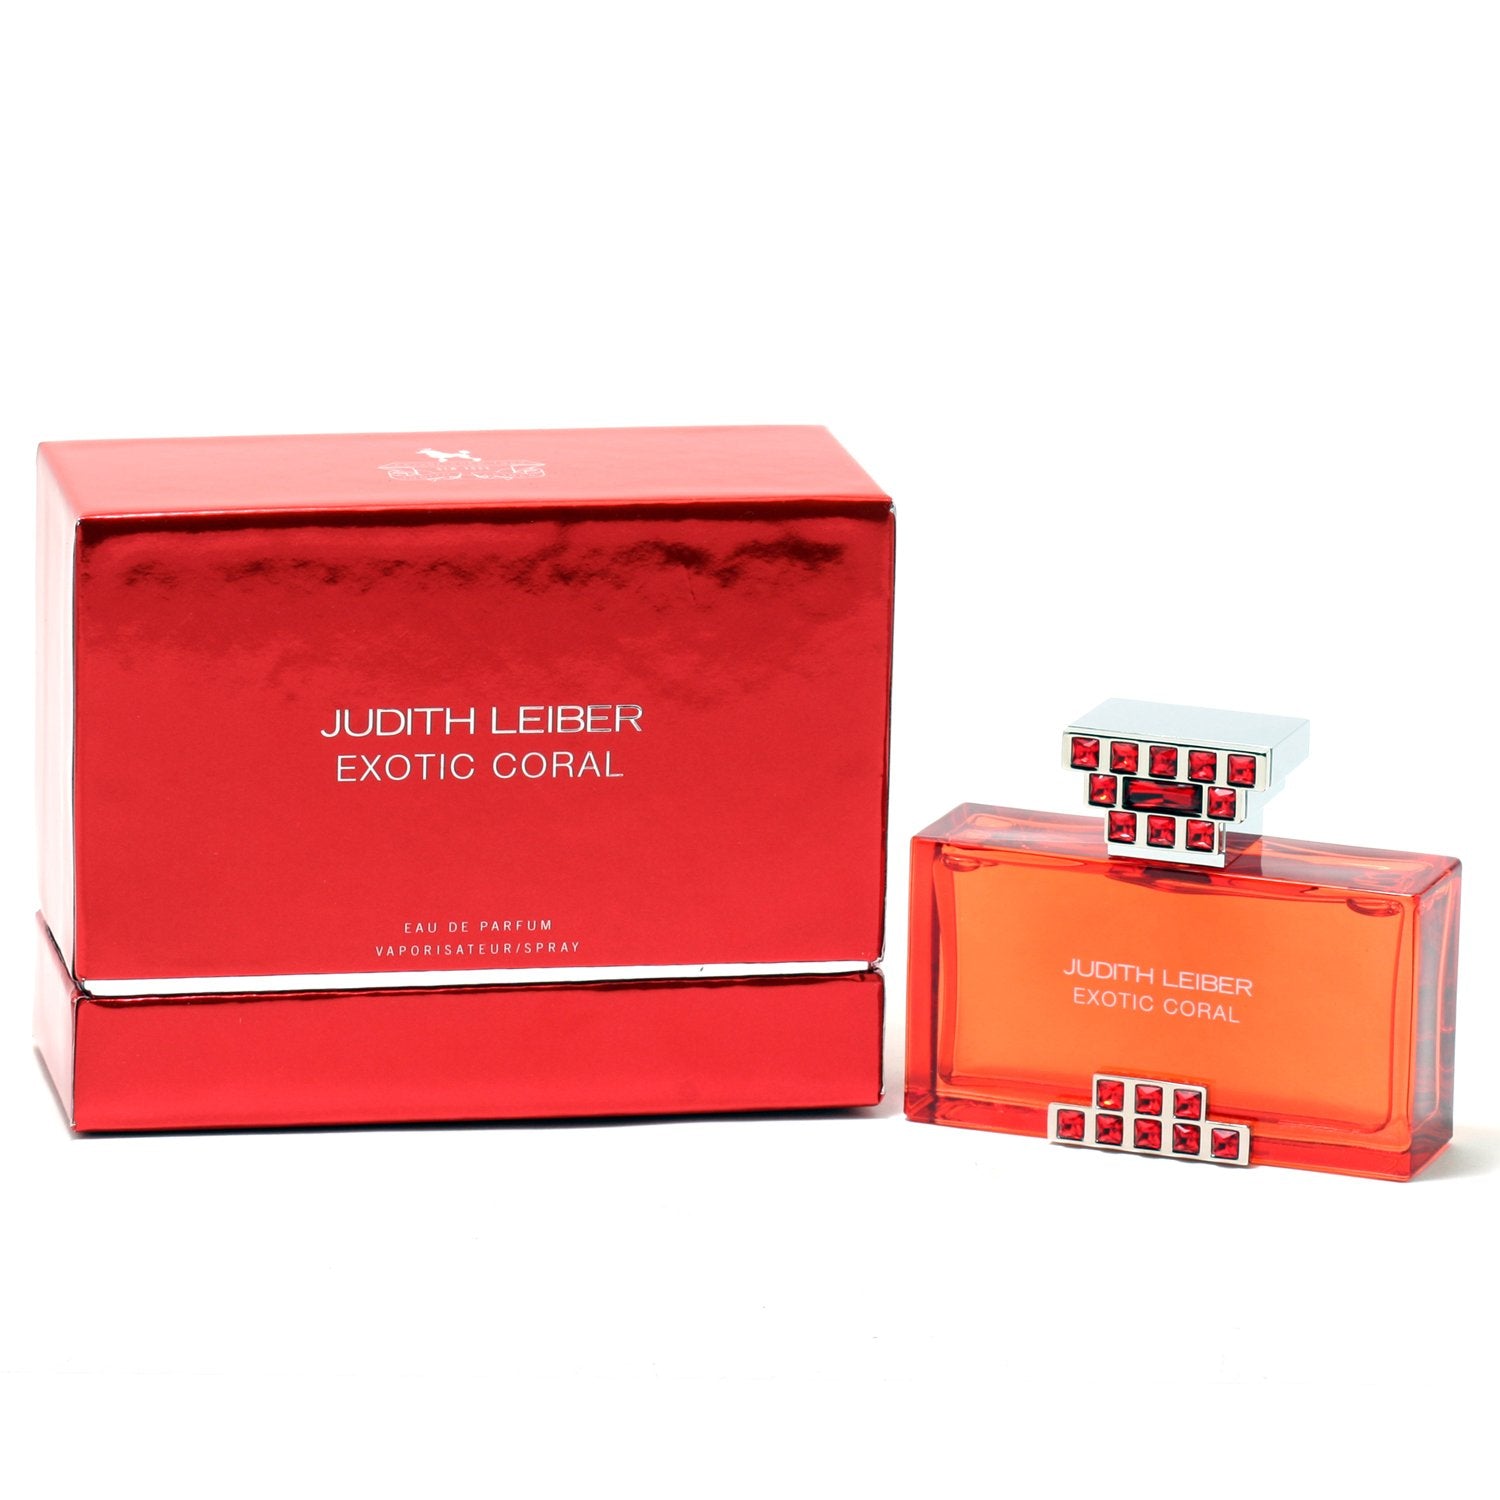 Perfume - JUDITH LEIBER EXOTIC CORAL FOR WOMEN - EAU DE PARFUM SPRAY, 2.5 OZ